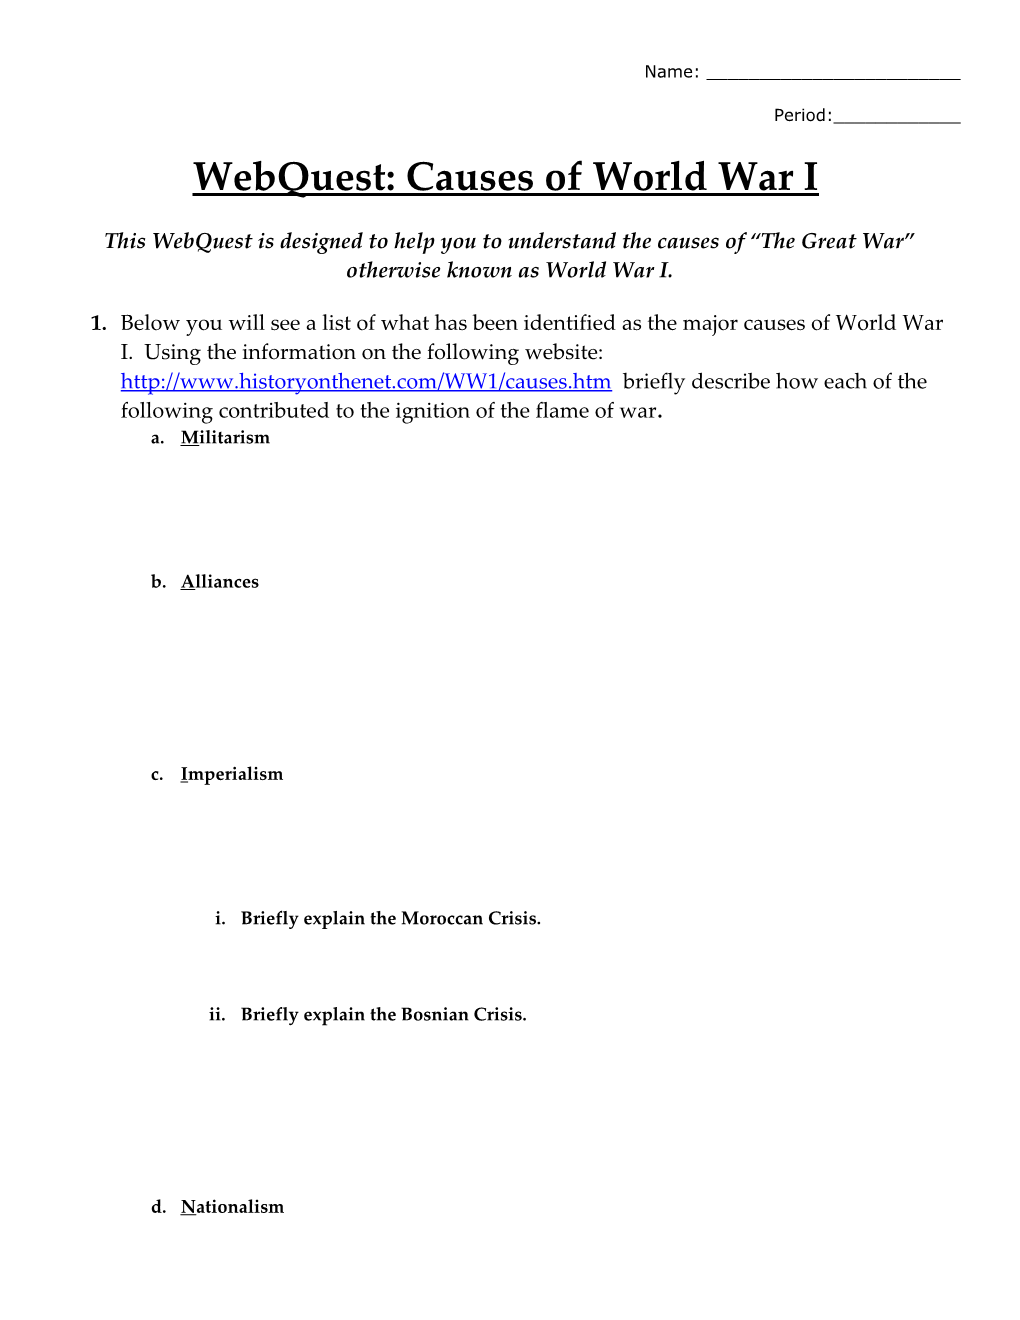 Webquest: Causes of World War I